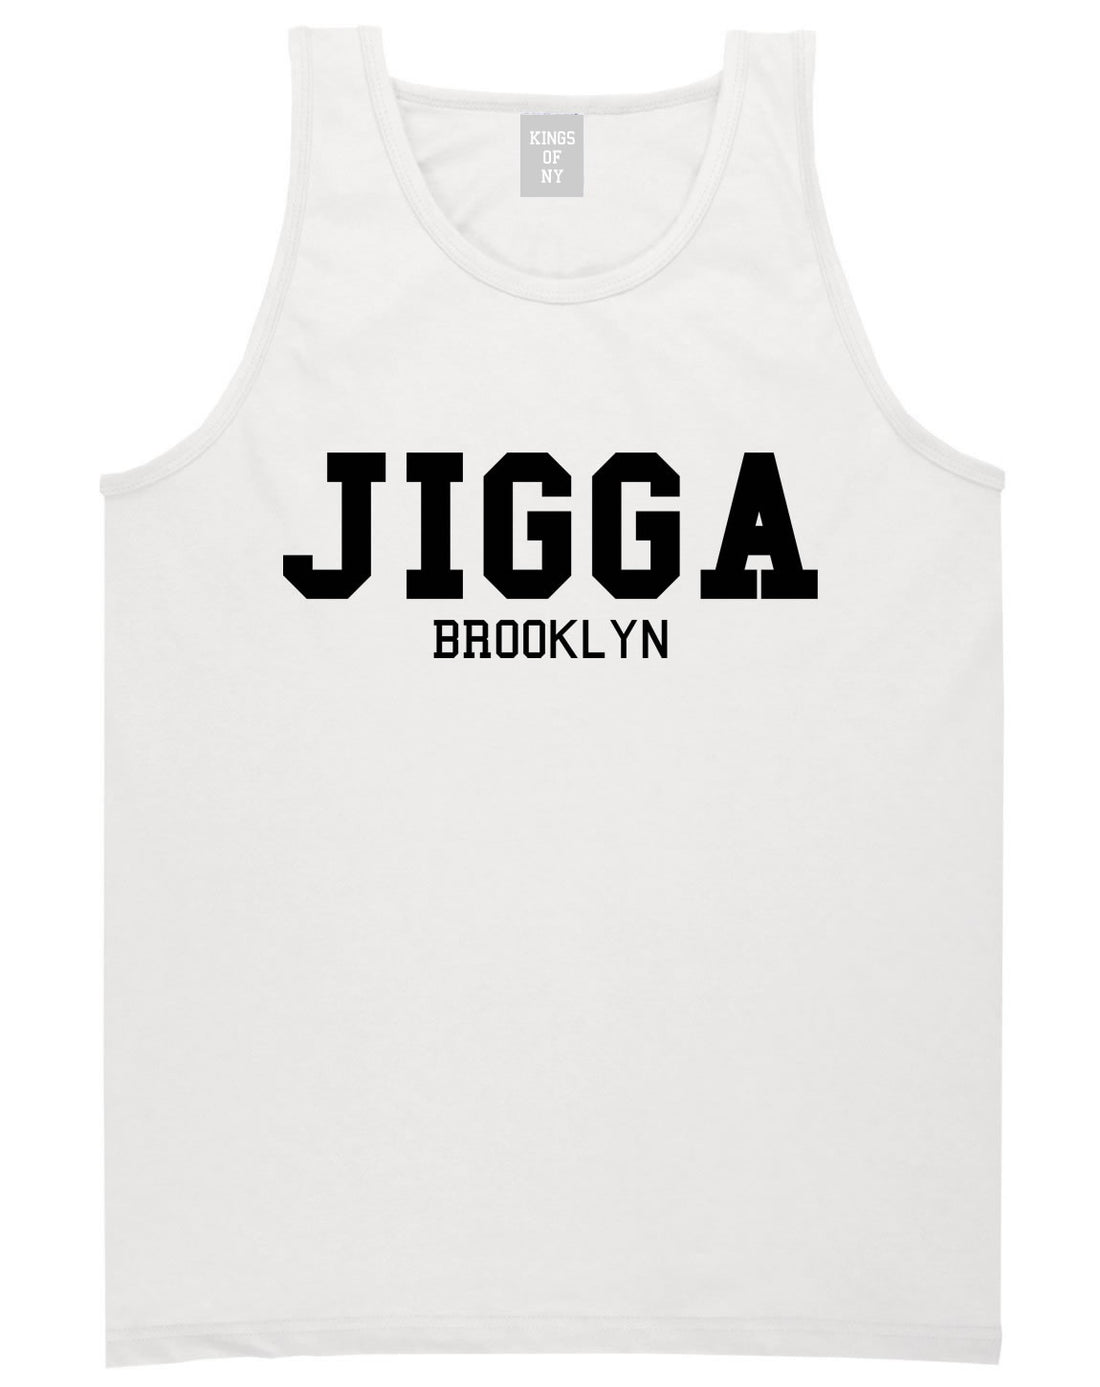 Jigga Brooklyn Tank Top in White by Kings Of NY